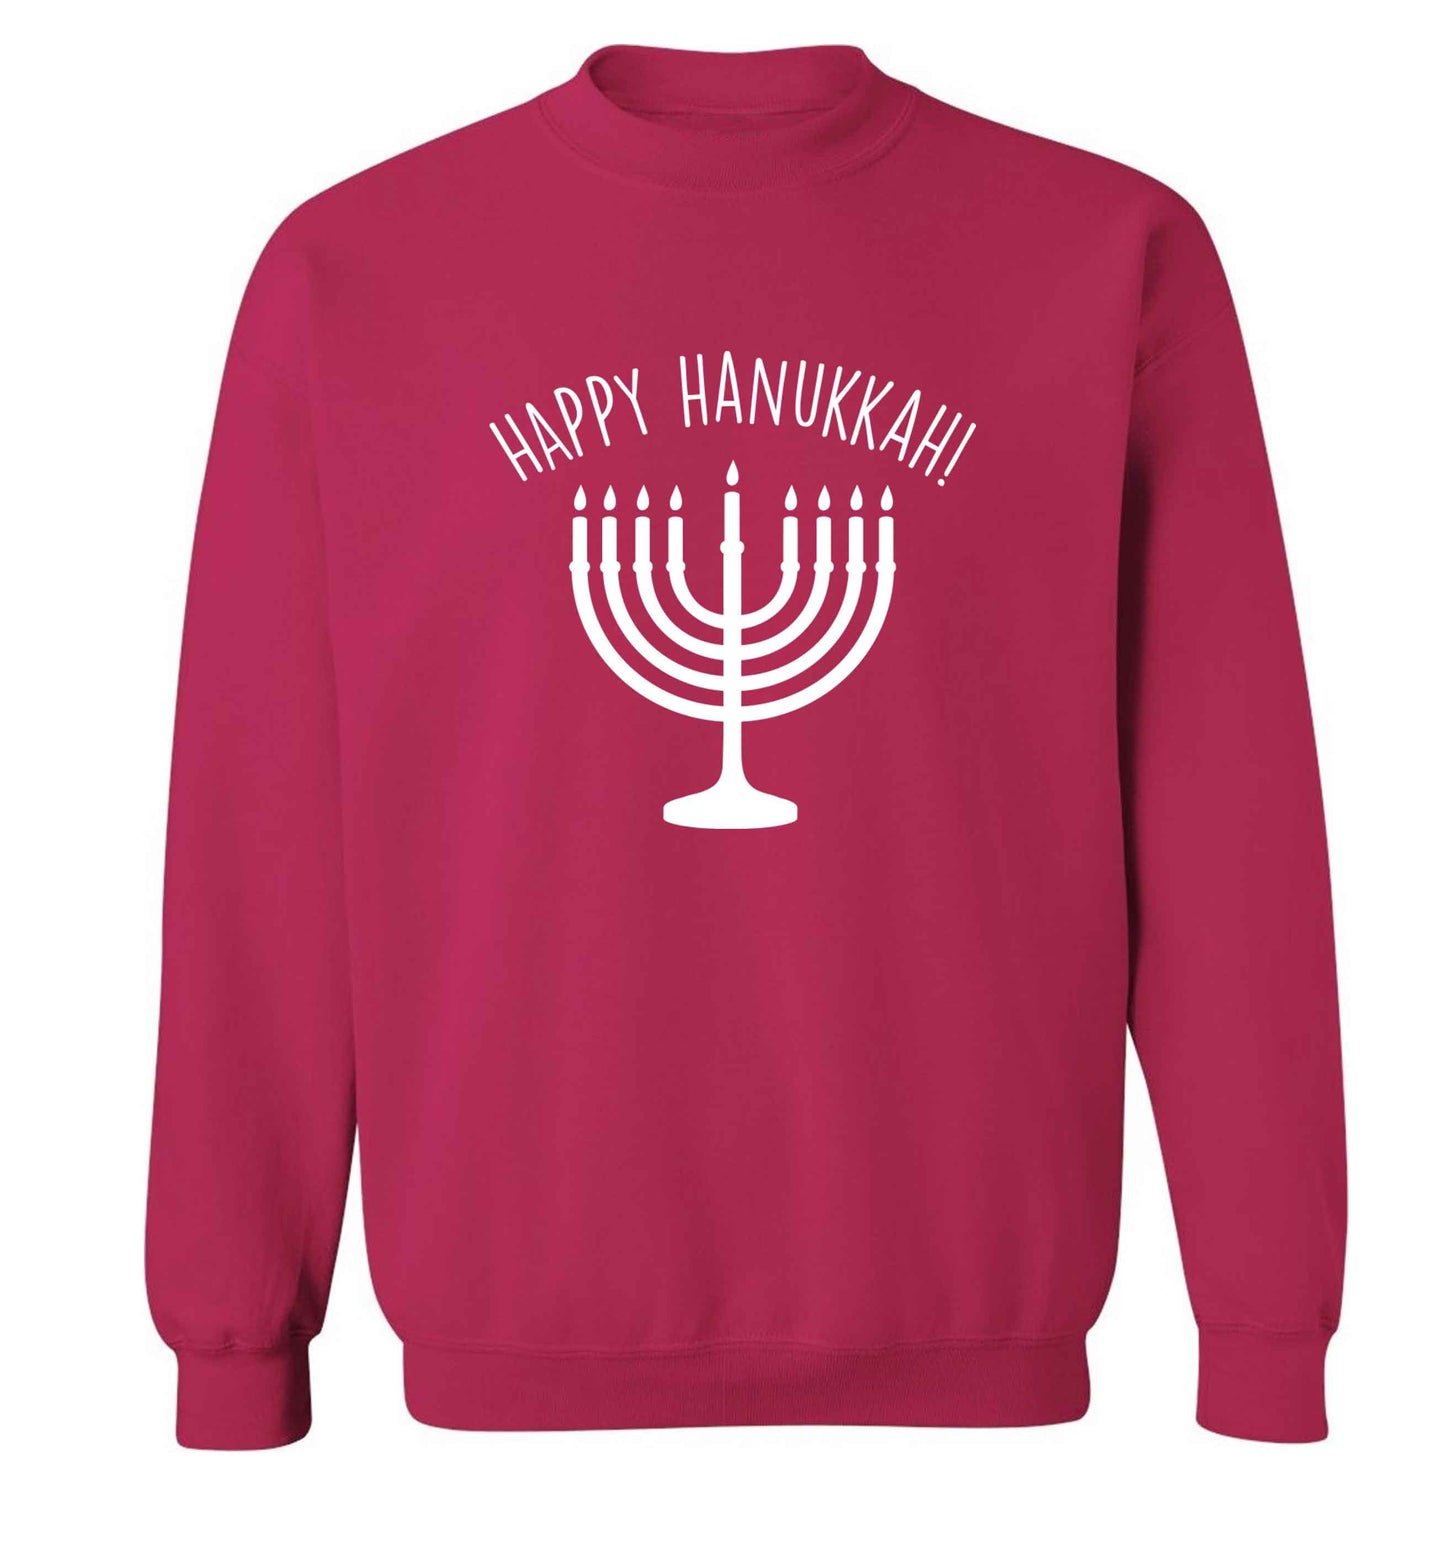 Happy hanukkah adult's unisex pink sweater 2XL